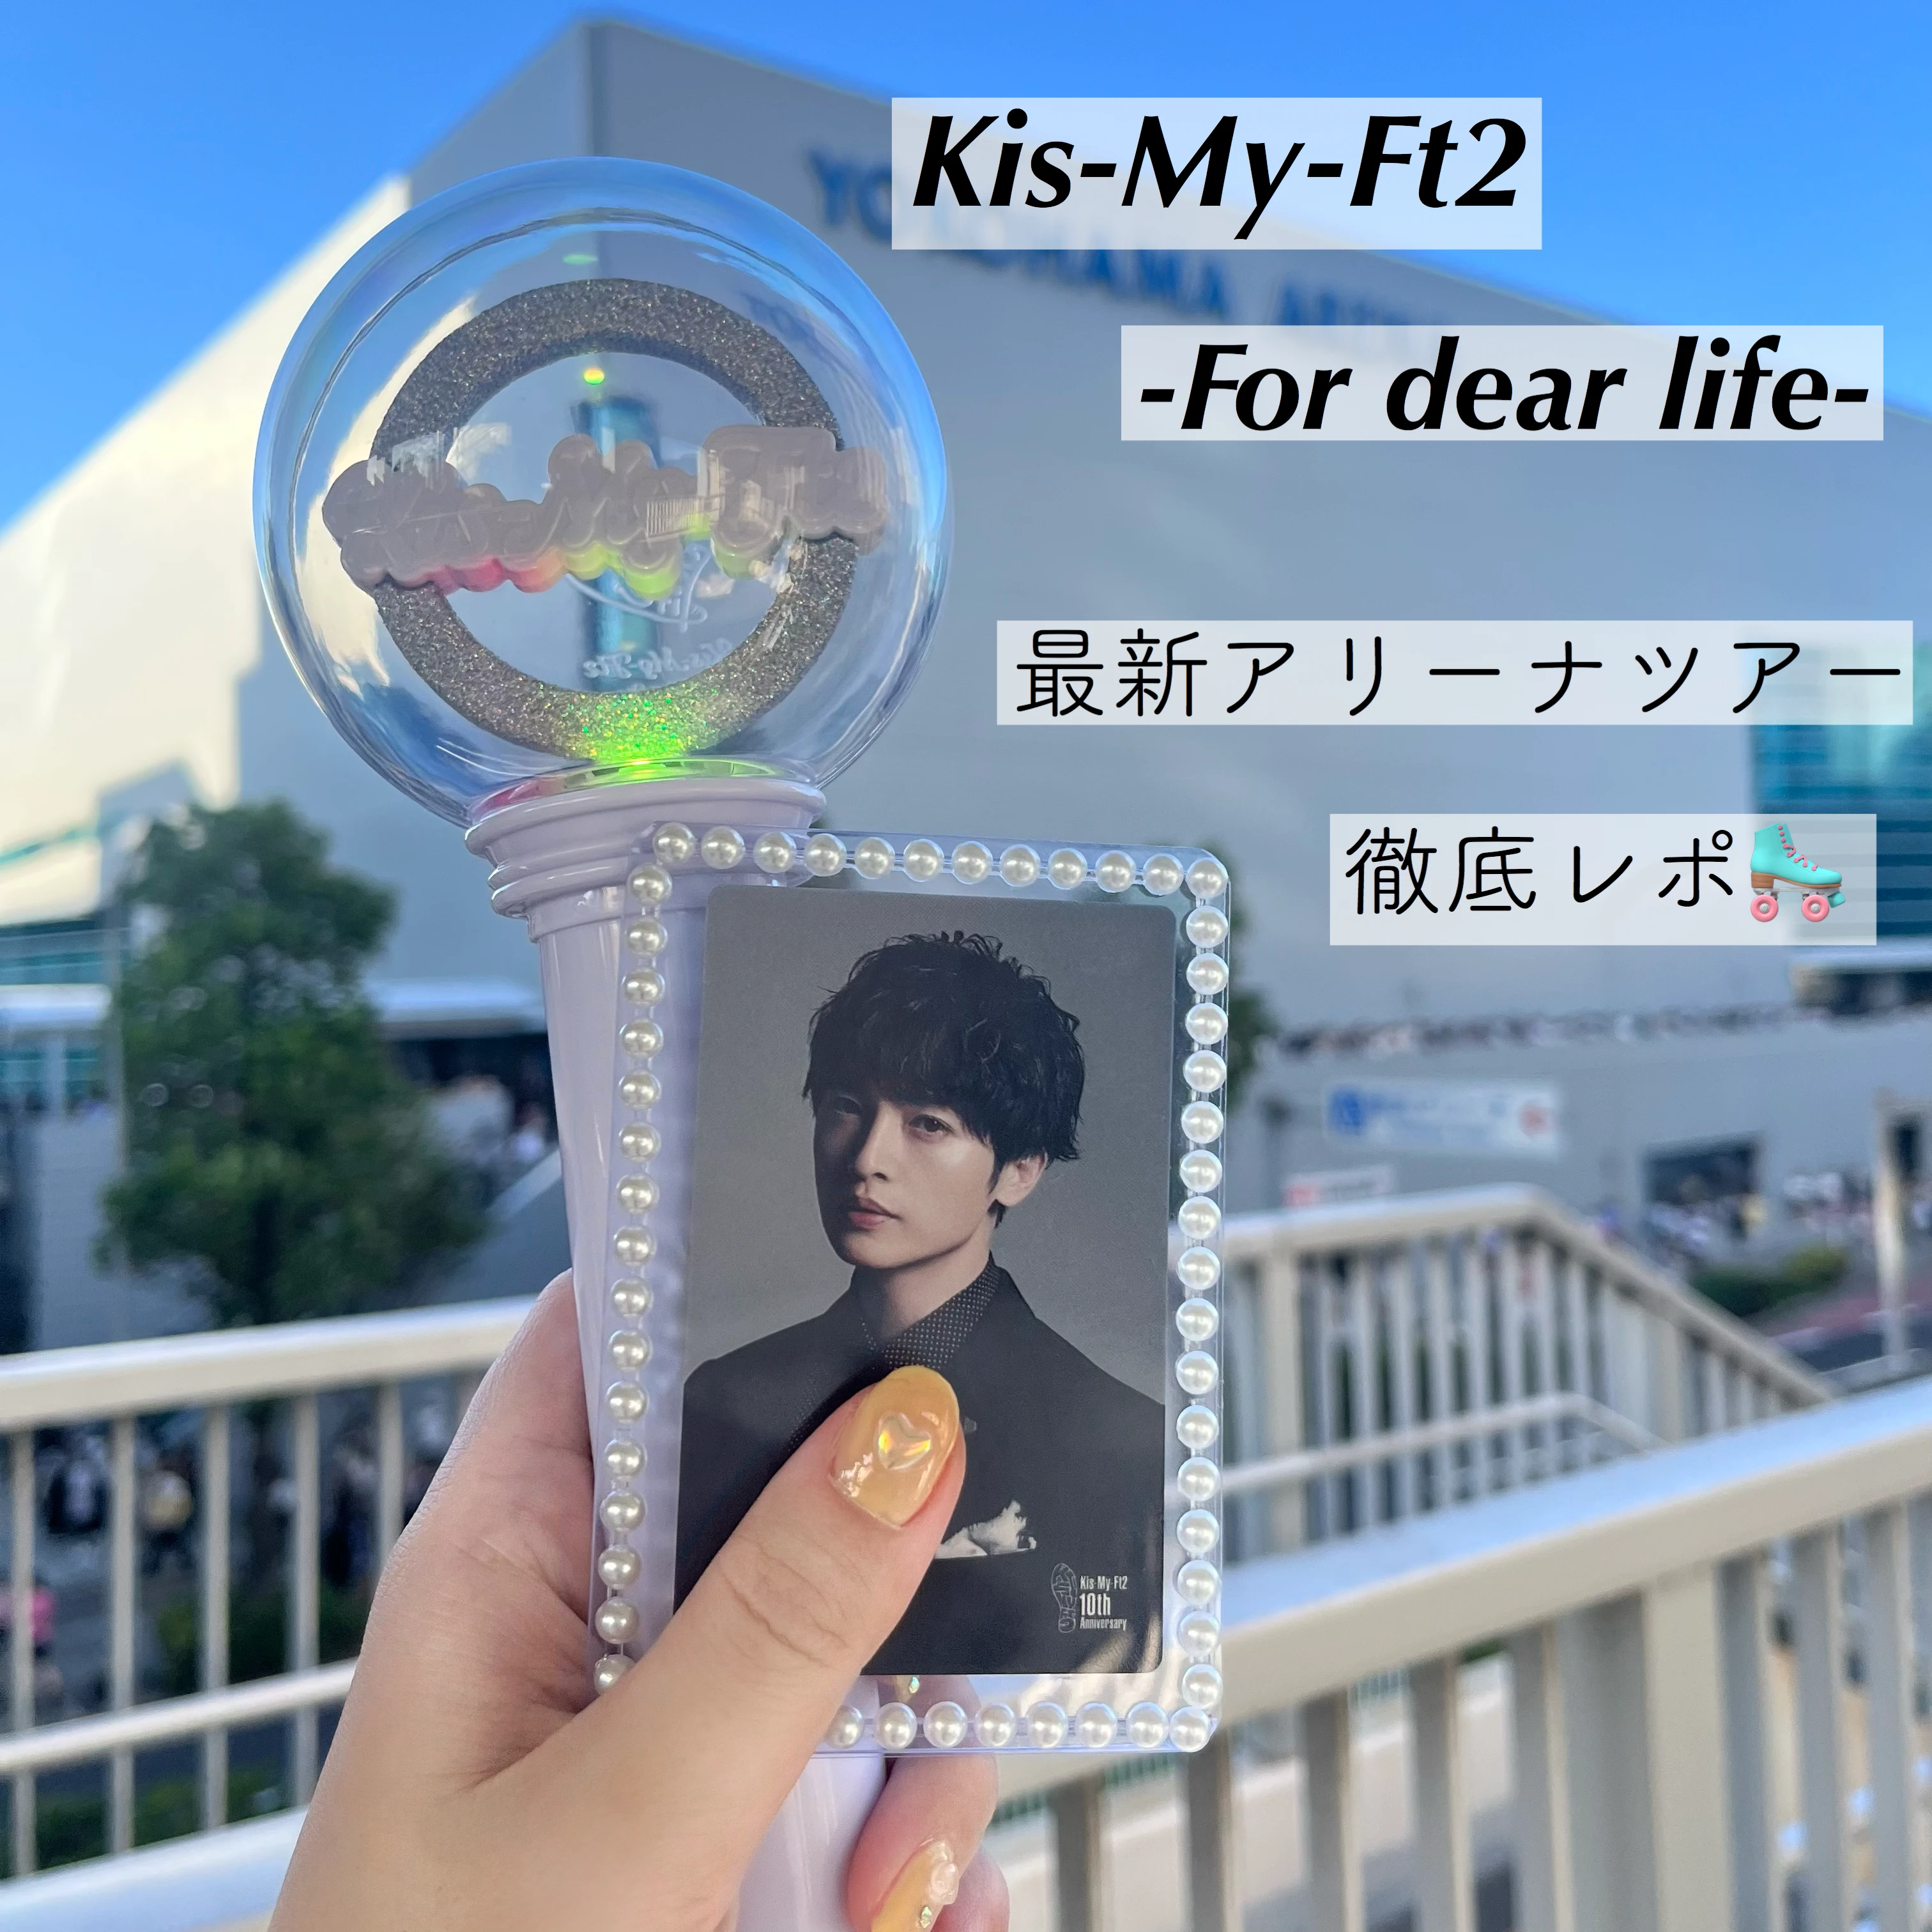 「Kis-My-Ft2 -For dear life-」のレポート記事　表紙